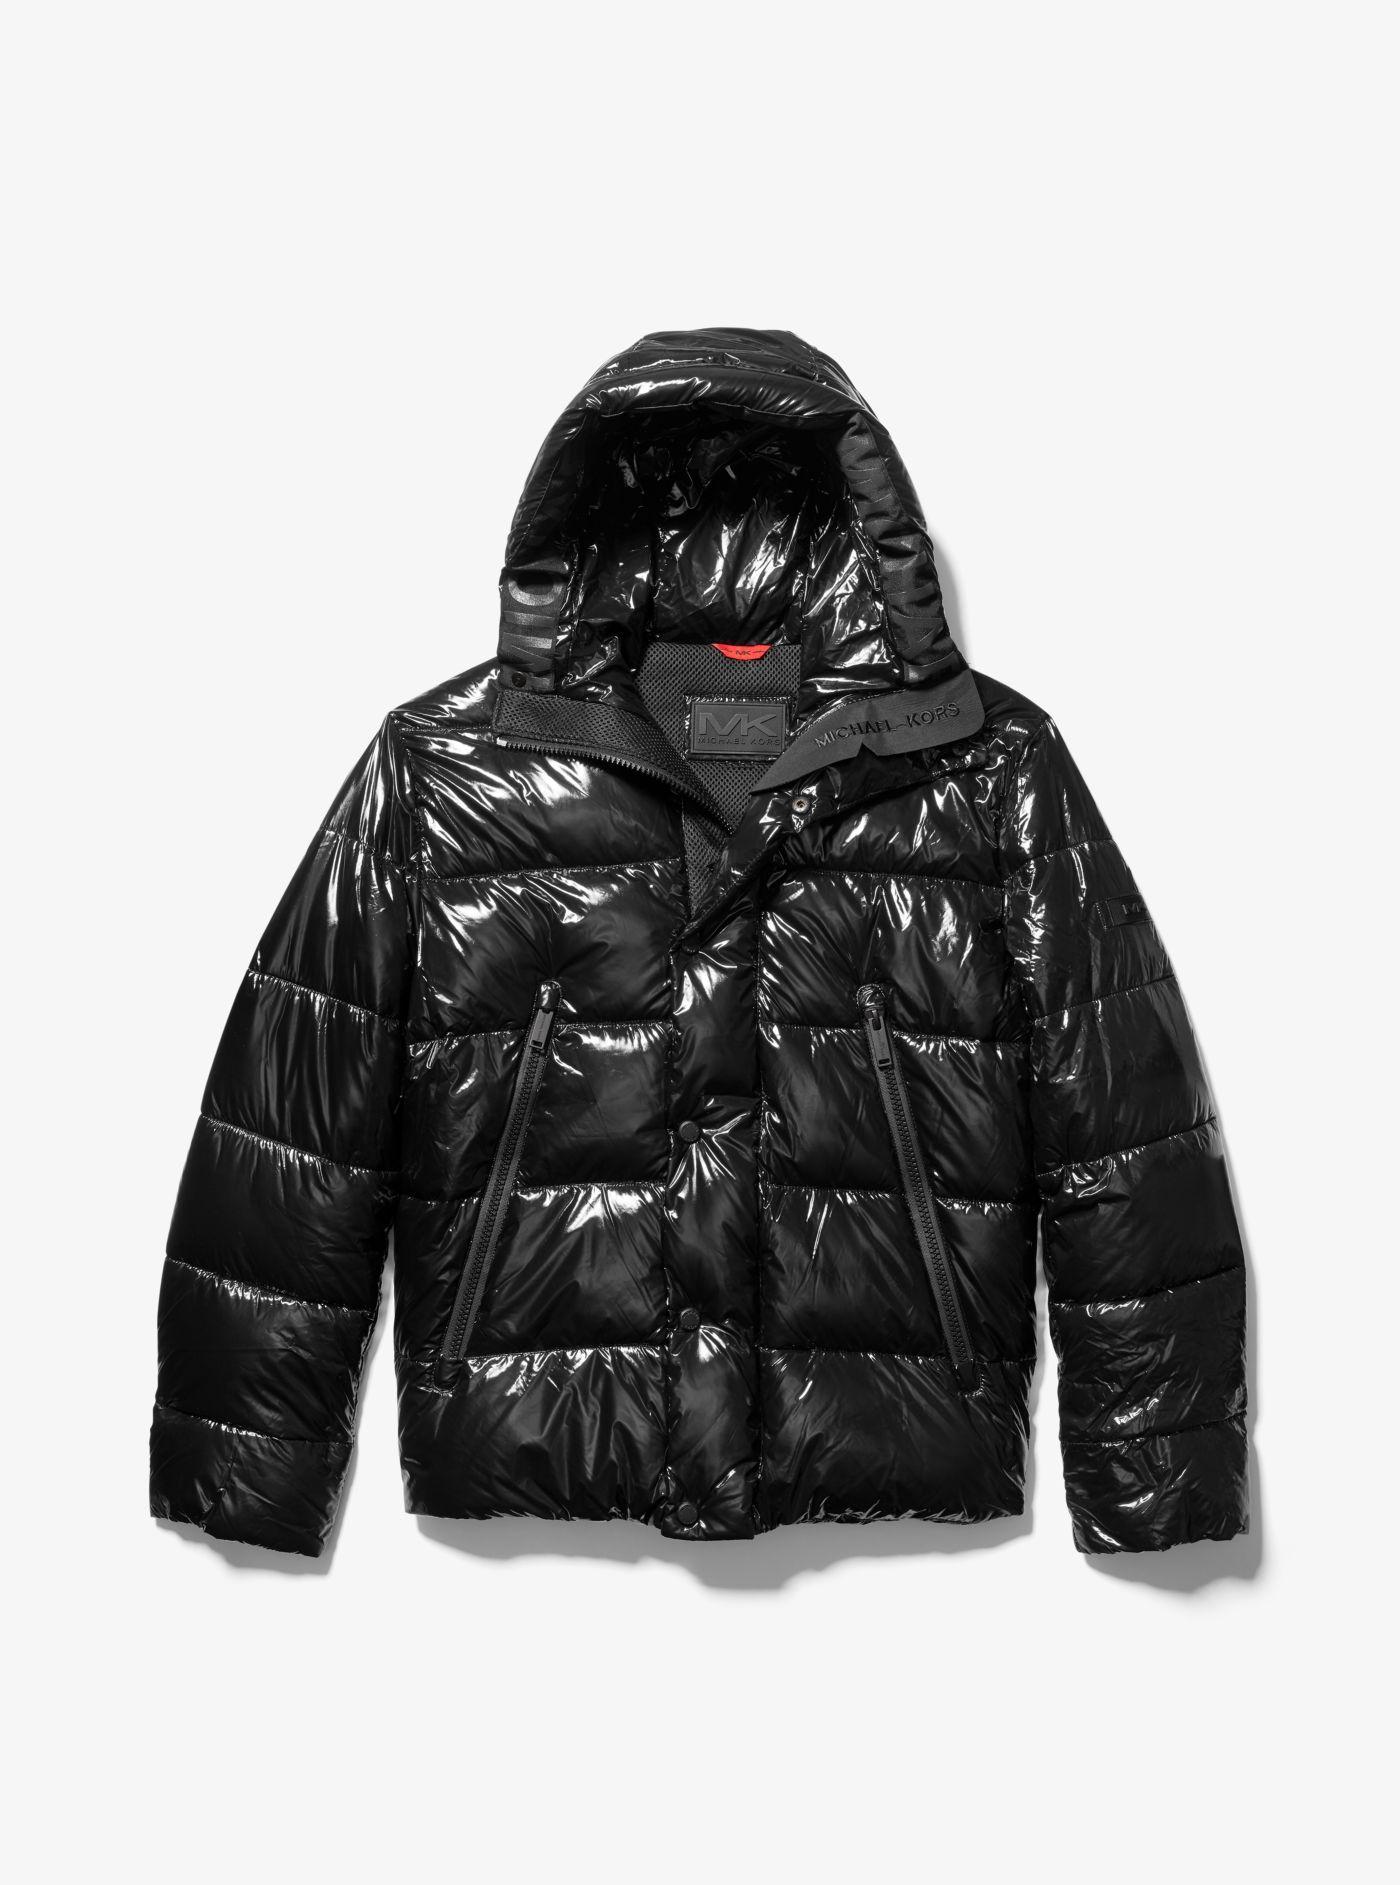 Michael Kors Synthetic Metallic Ciré Hooded Puffer Jacket in Black - Lyst